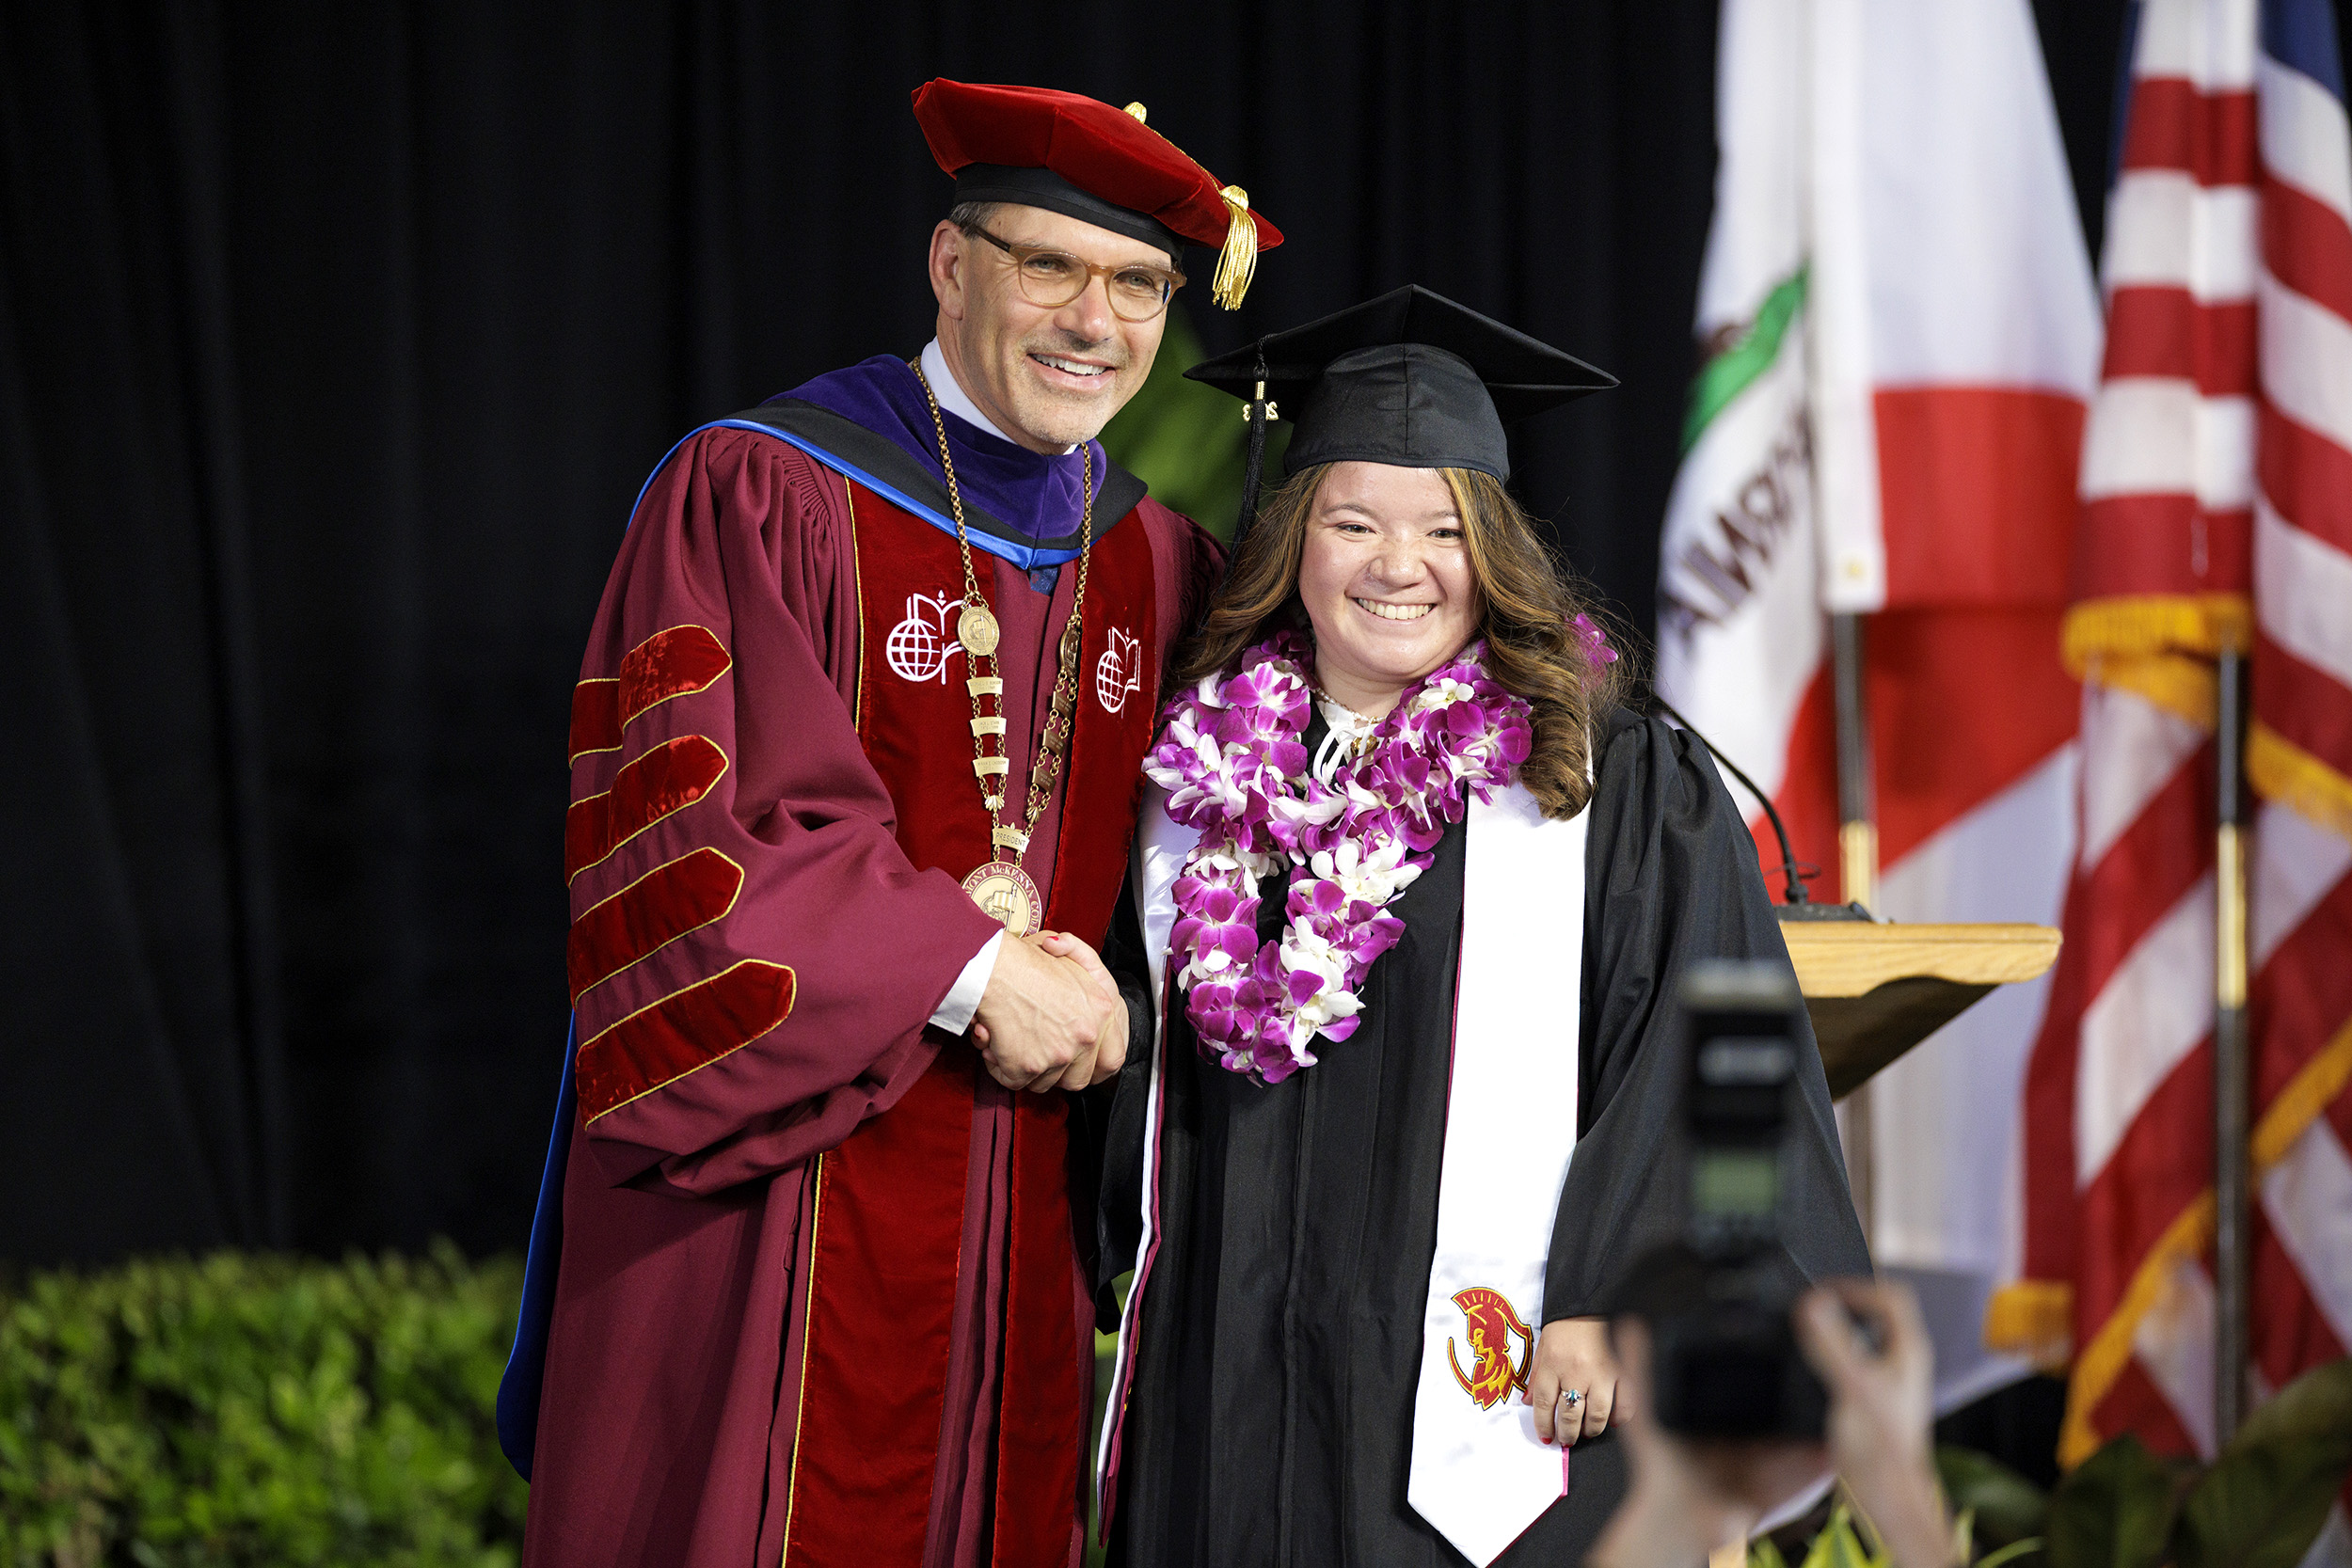 President Chodosh with a graduate.